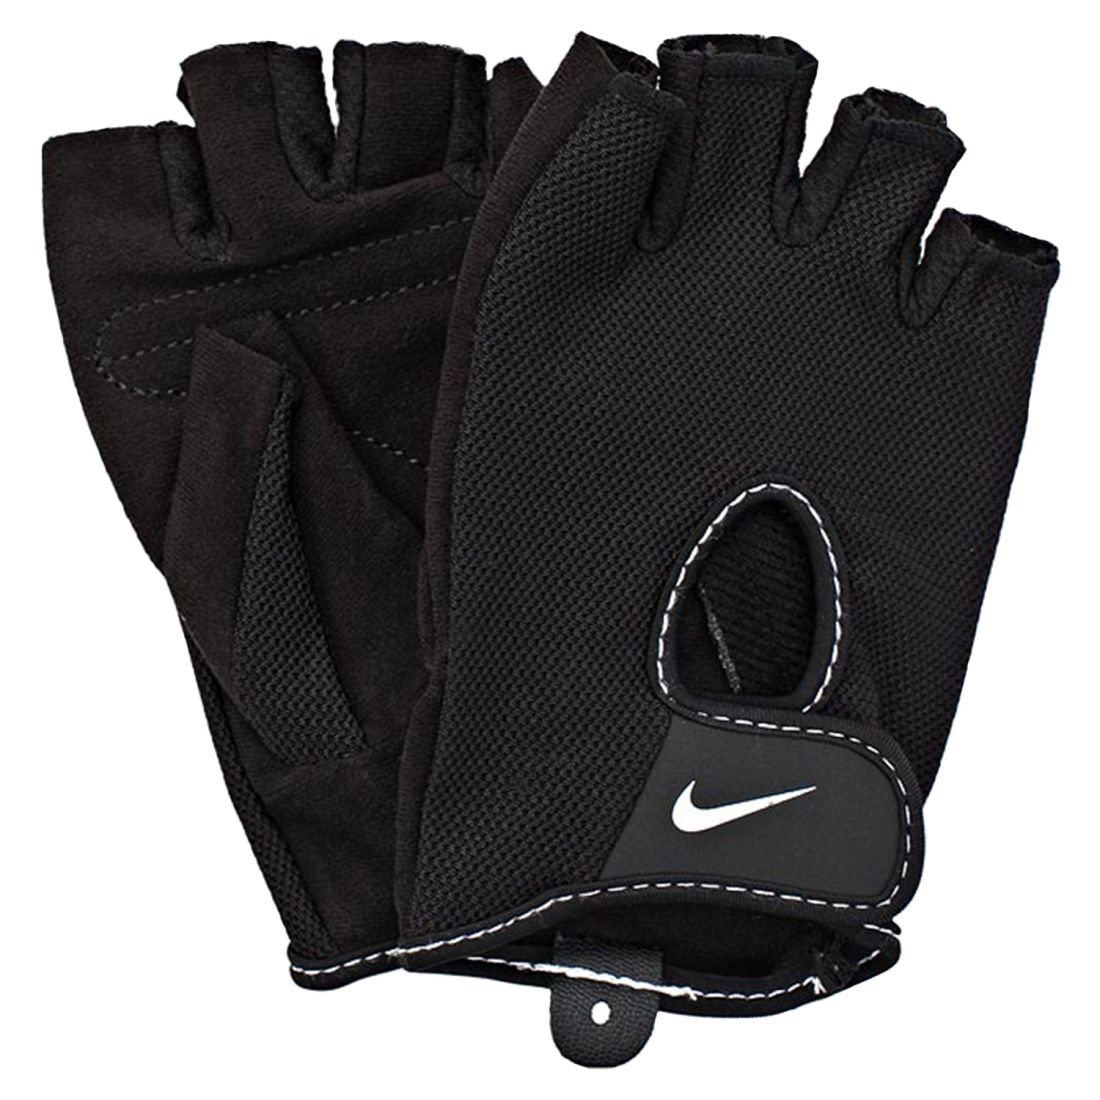 Перчатки для фитнеса Nike Wmn's Fundamental Training Gloves II